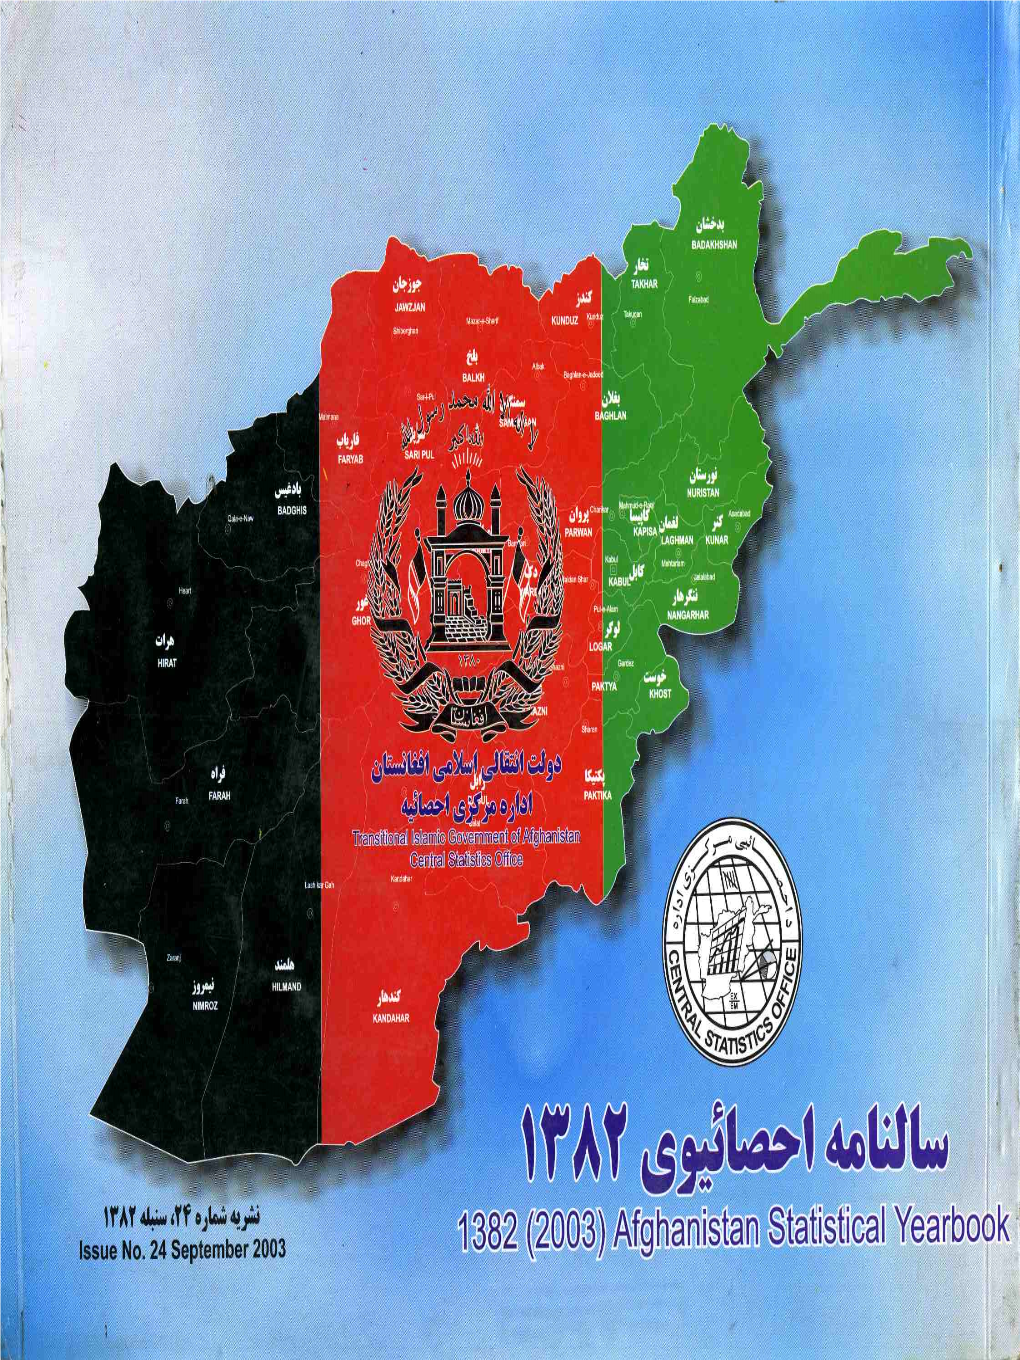 1382 (2003) Afghani:Tan Statistical Yearbook